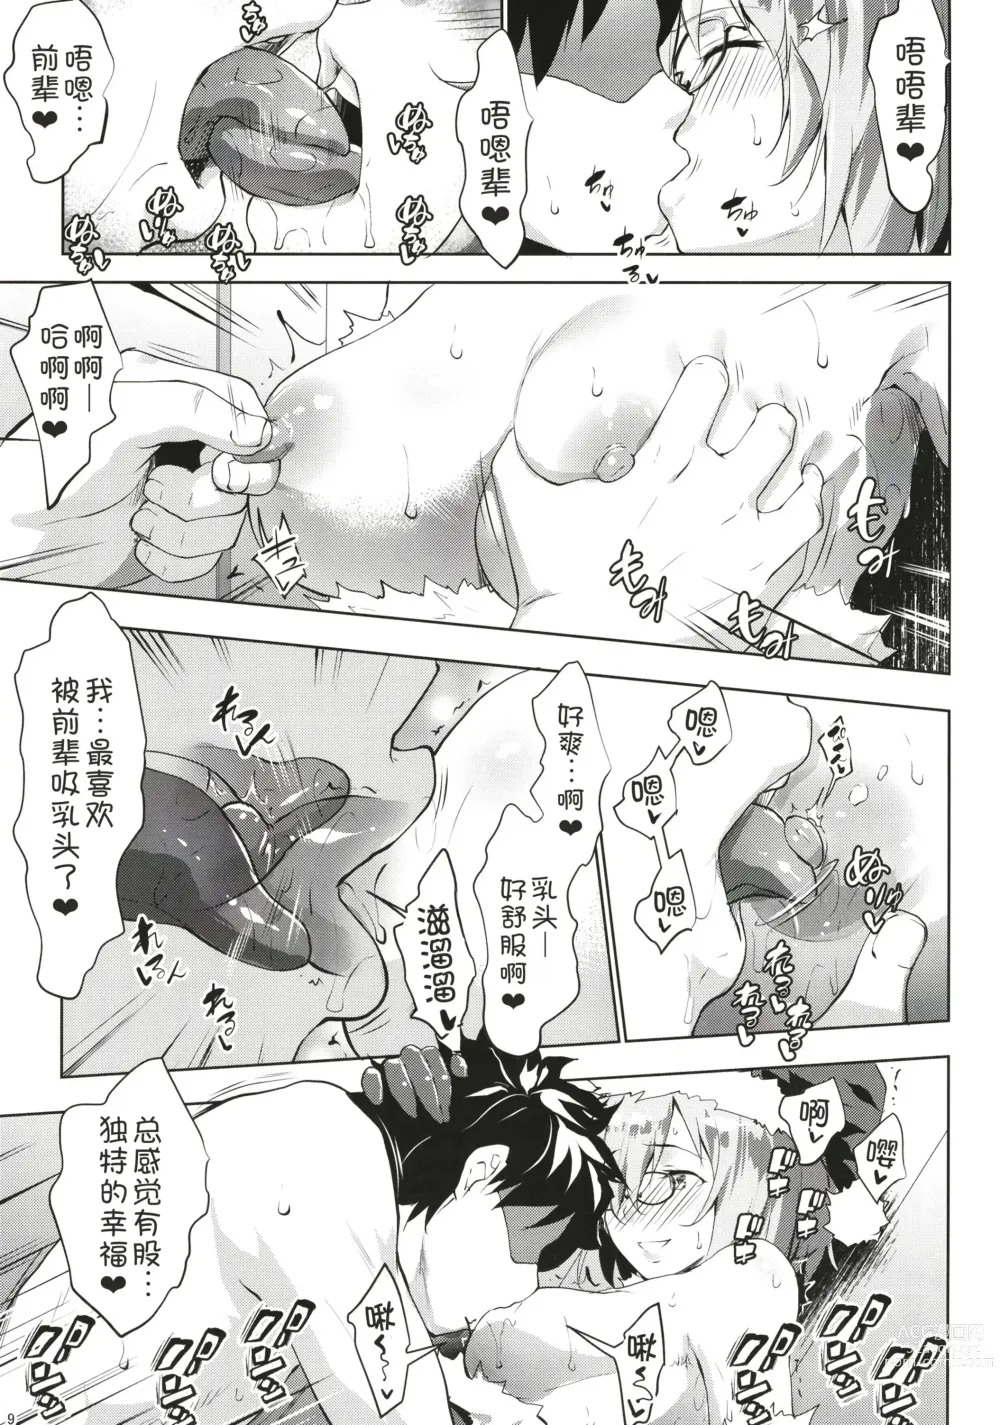 Page 9 of doujinshi Merry NitocrisMash